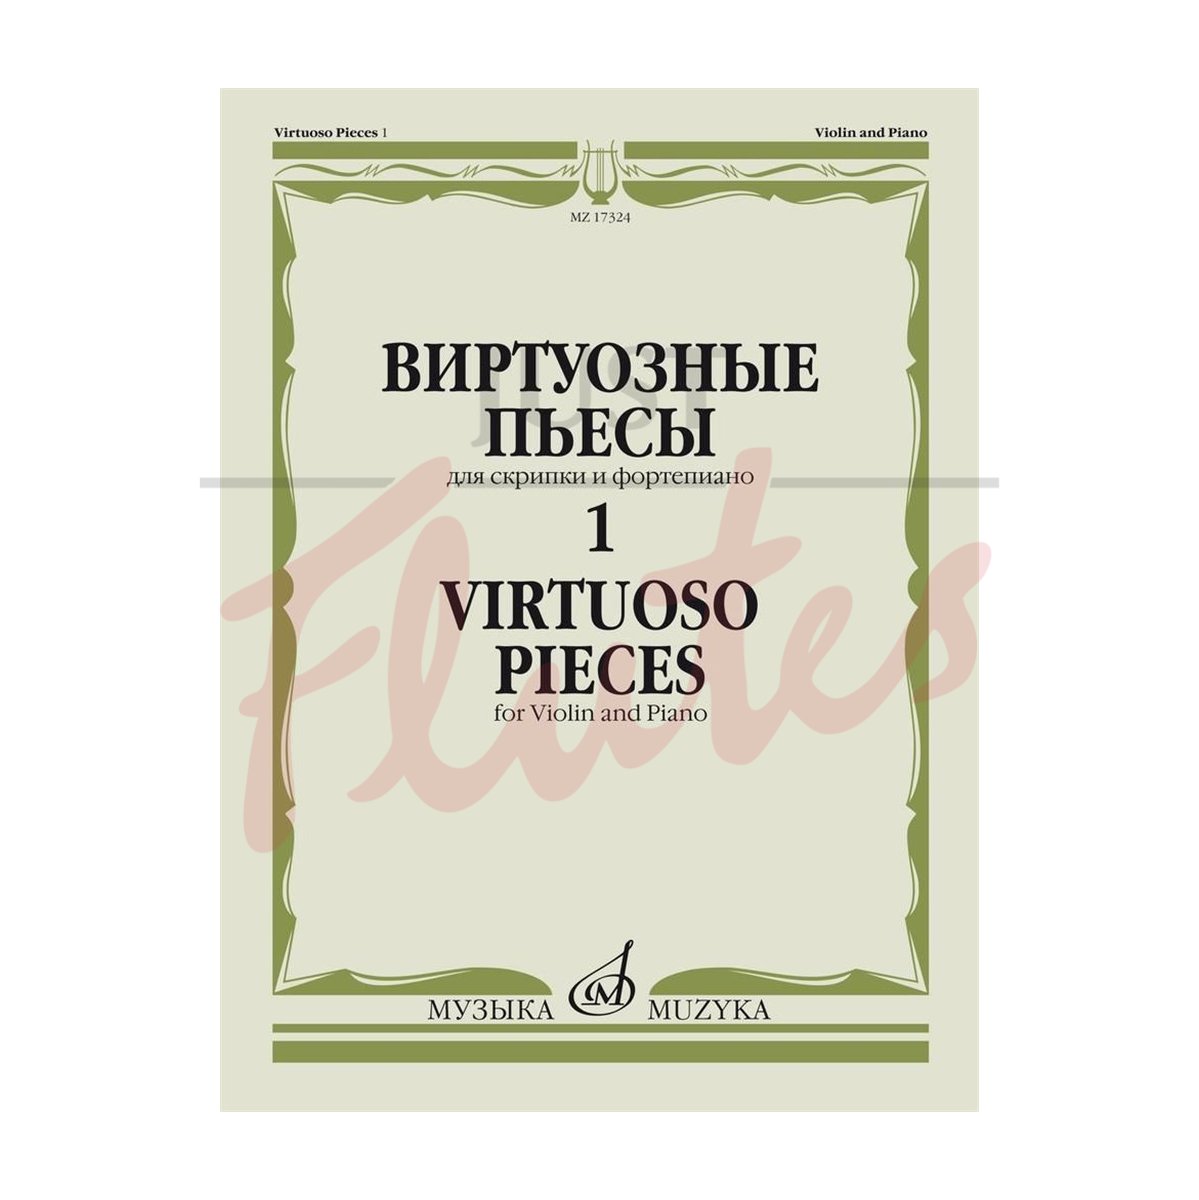 Virtuoso Pieces for Violin and Piano, Volume 1